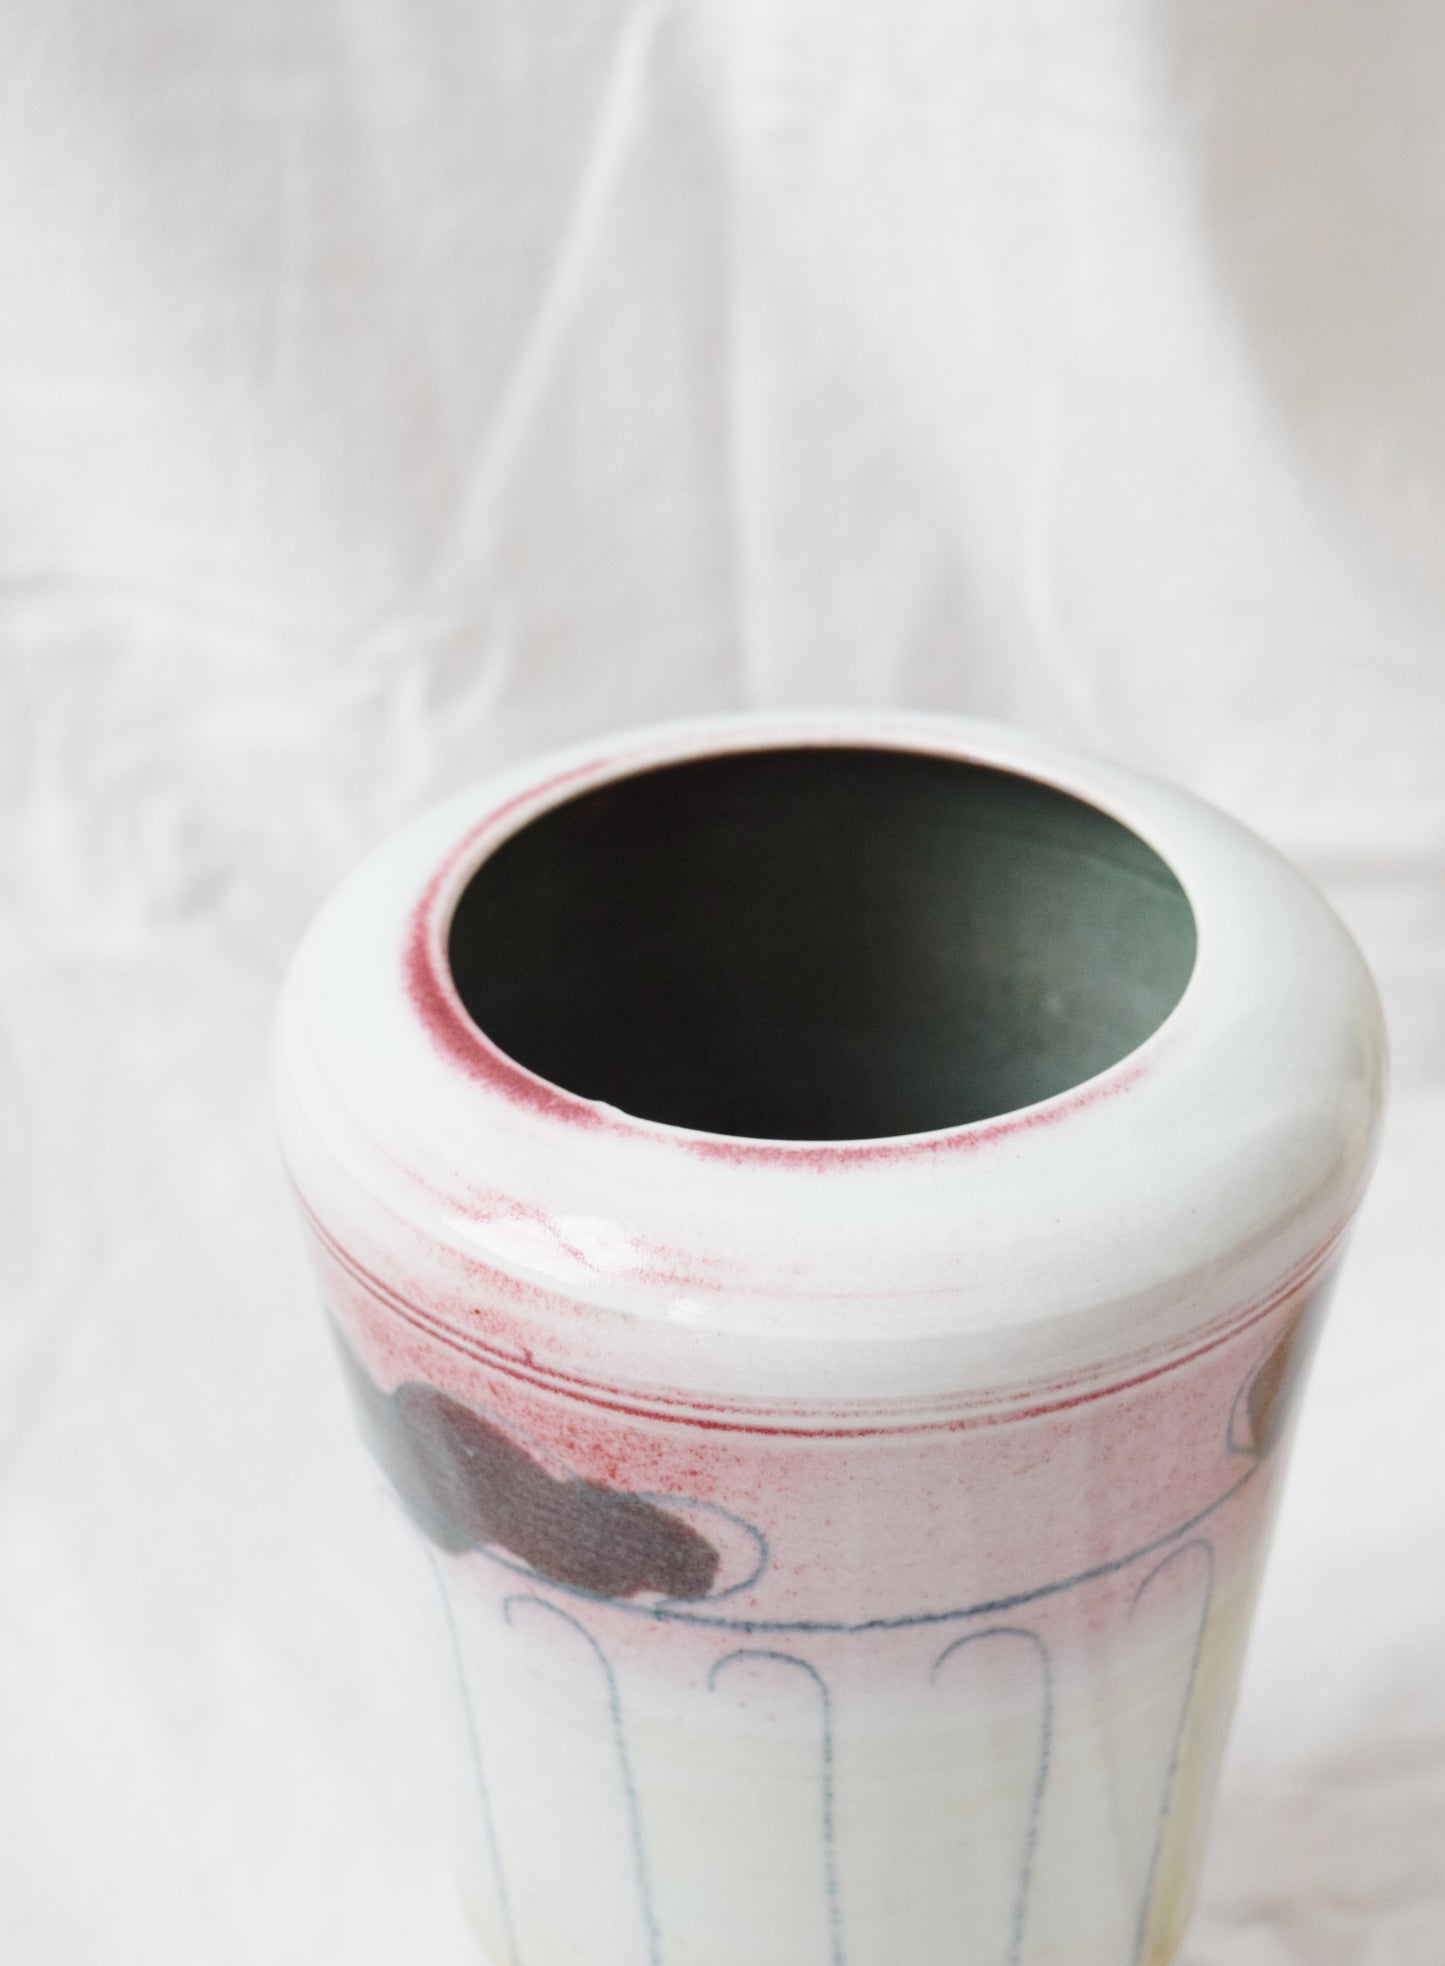 Large Hand Painted Ceramic Vase